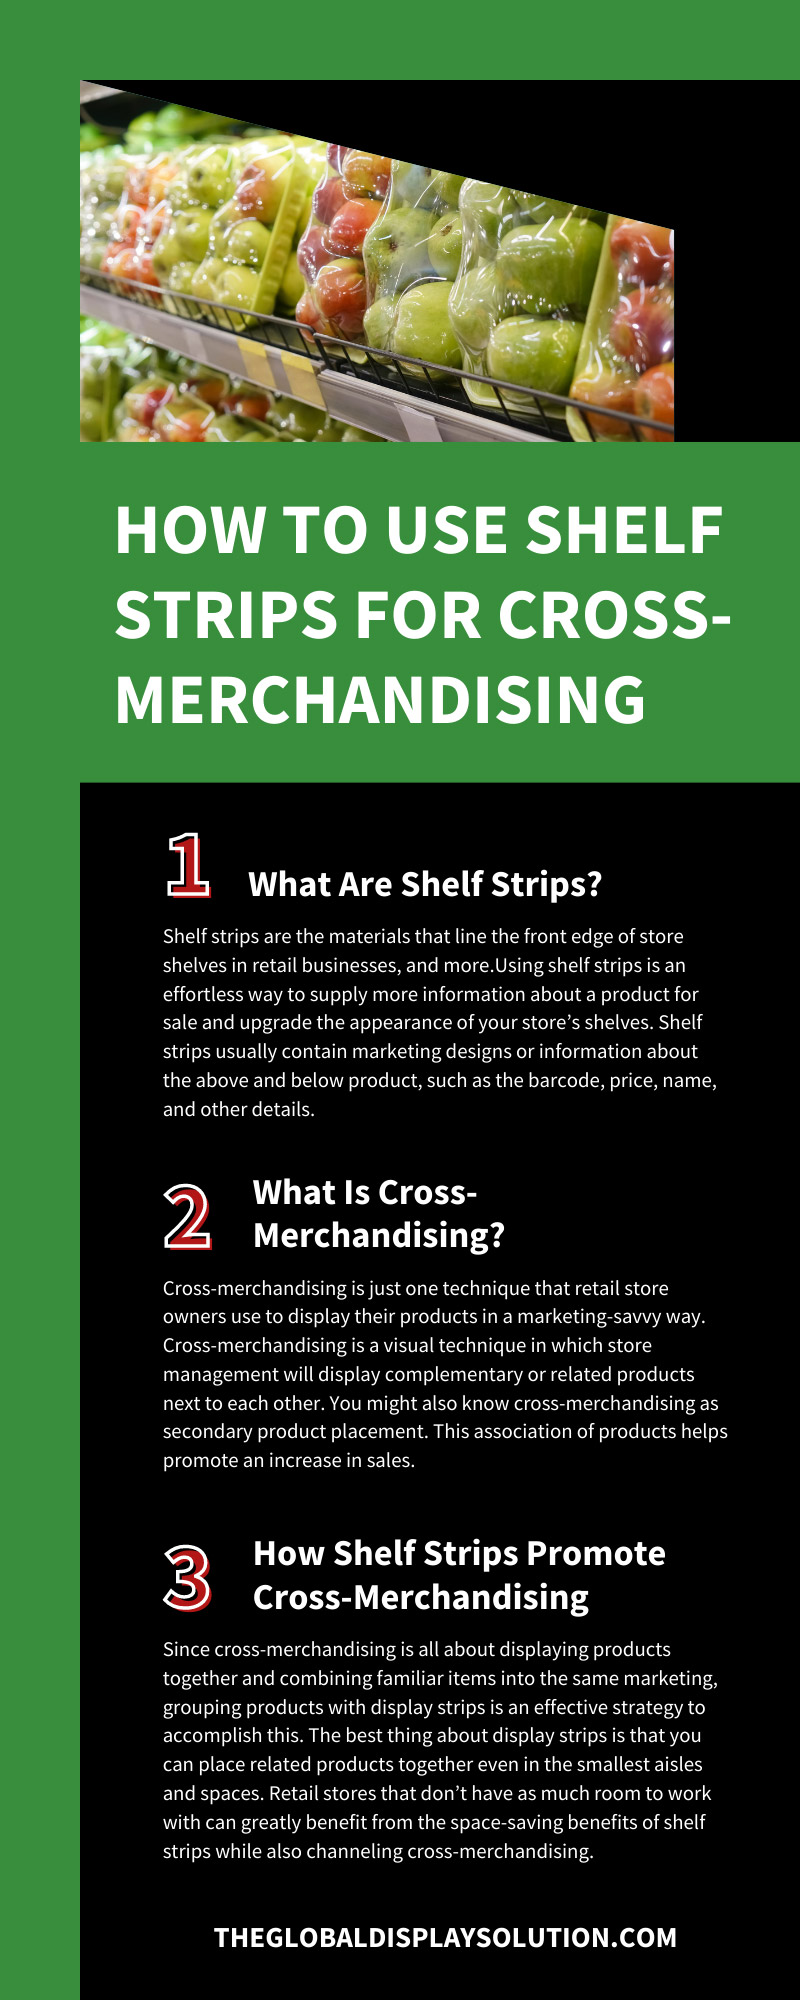 How To Use Shelf Strips for Cross-Merchandising